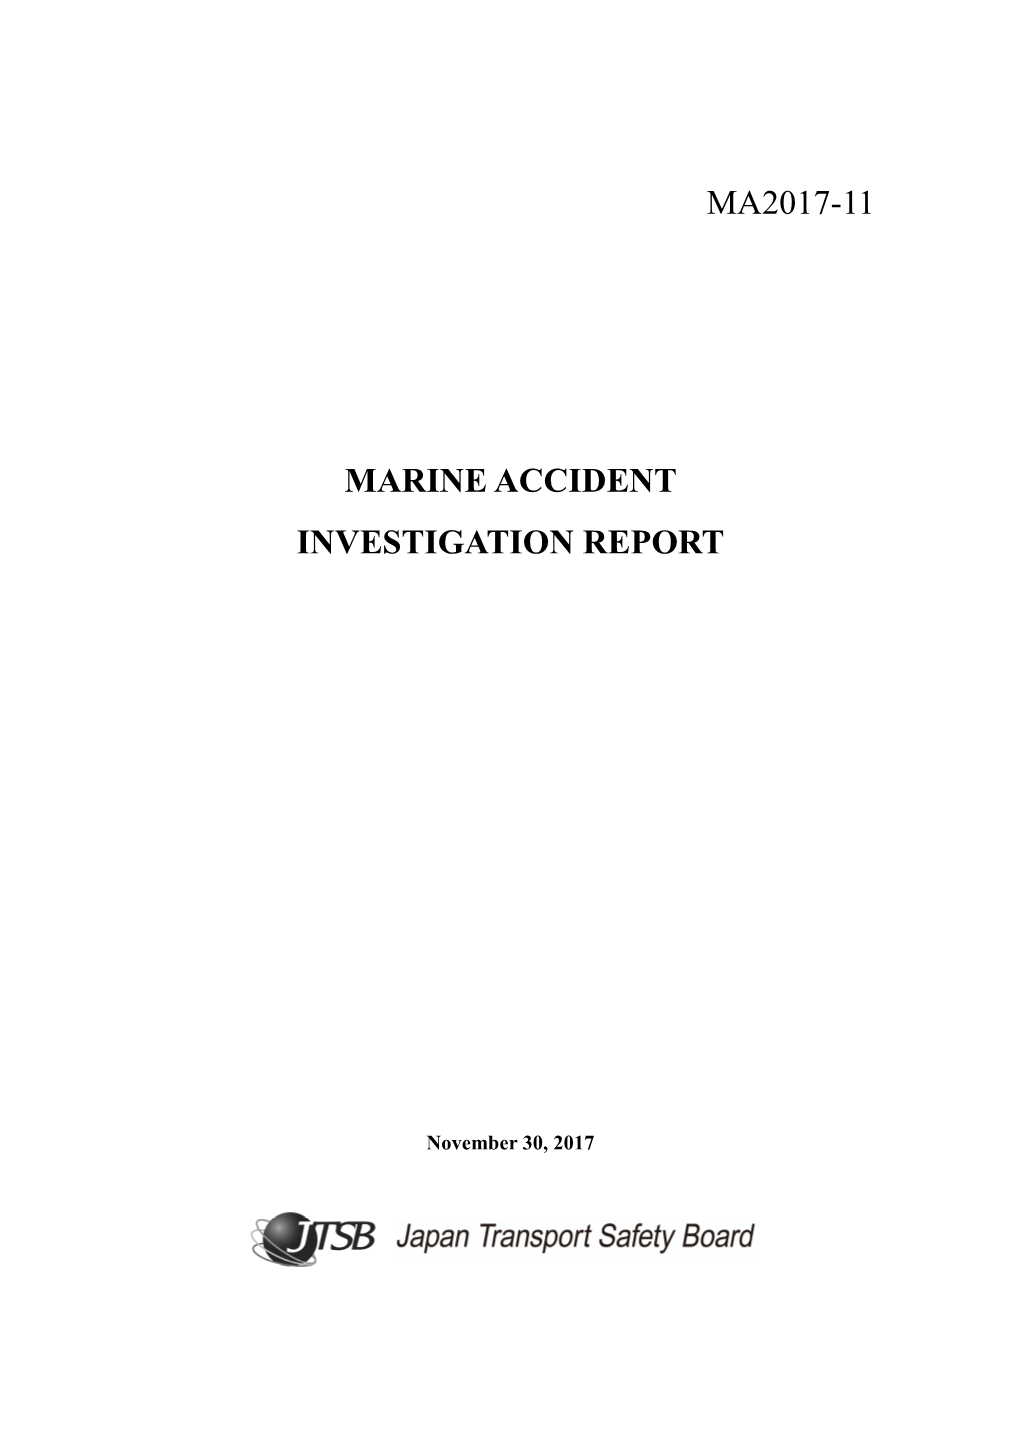 Ma2017-11 Marine Accident Investigation Report